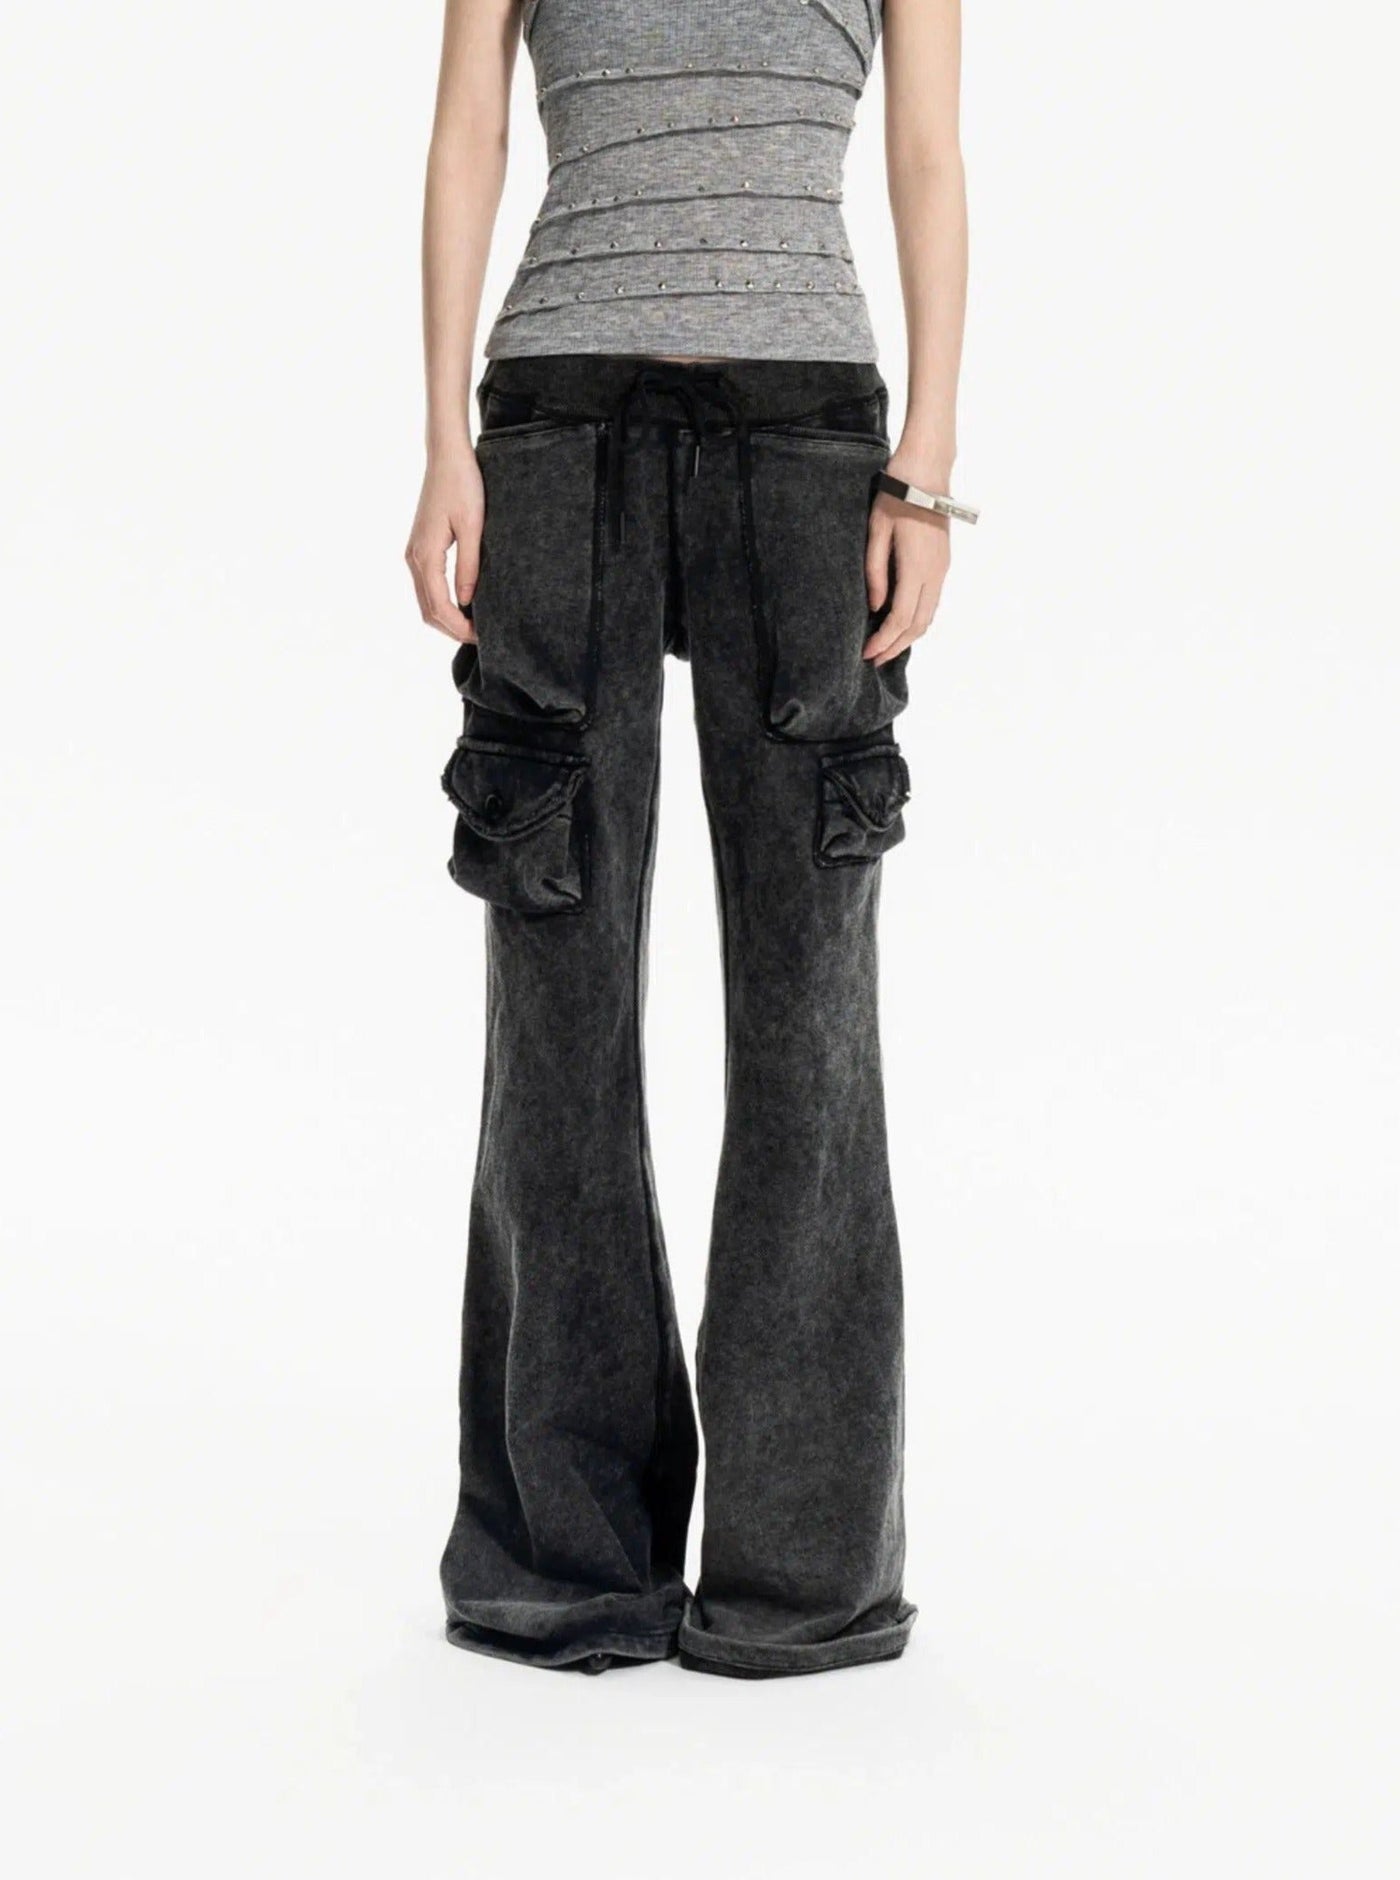 Multi-Pocket Slim Flare Sweatpants Korean Street Fashion Pants By Team Geek Shop Online at OH Vault